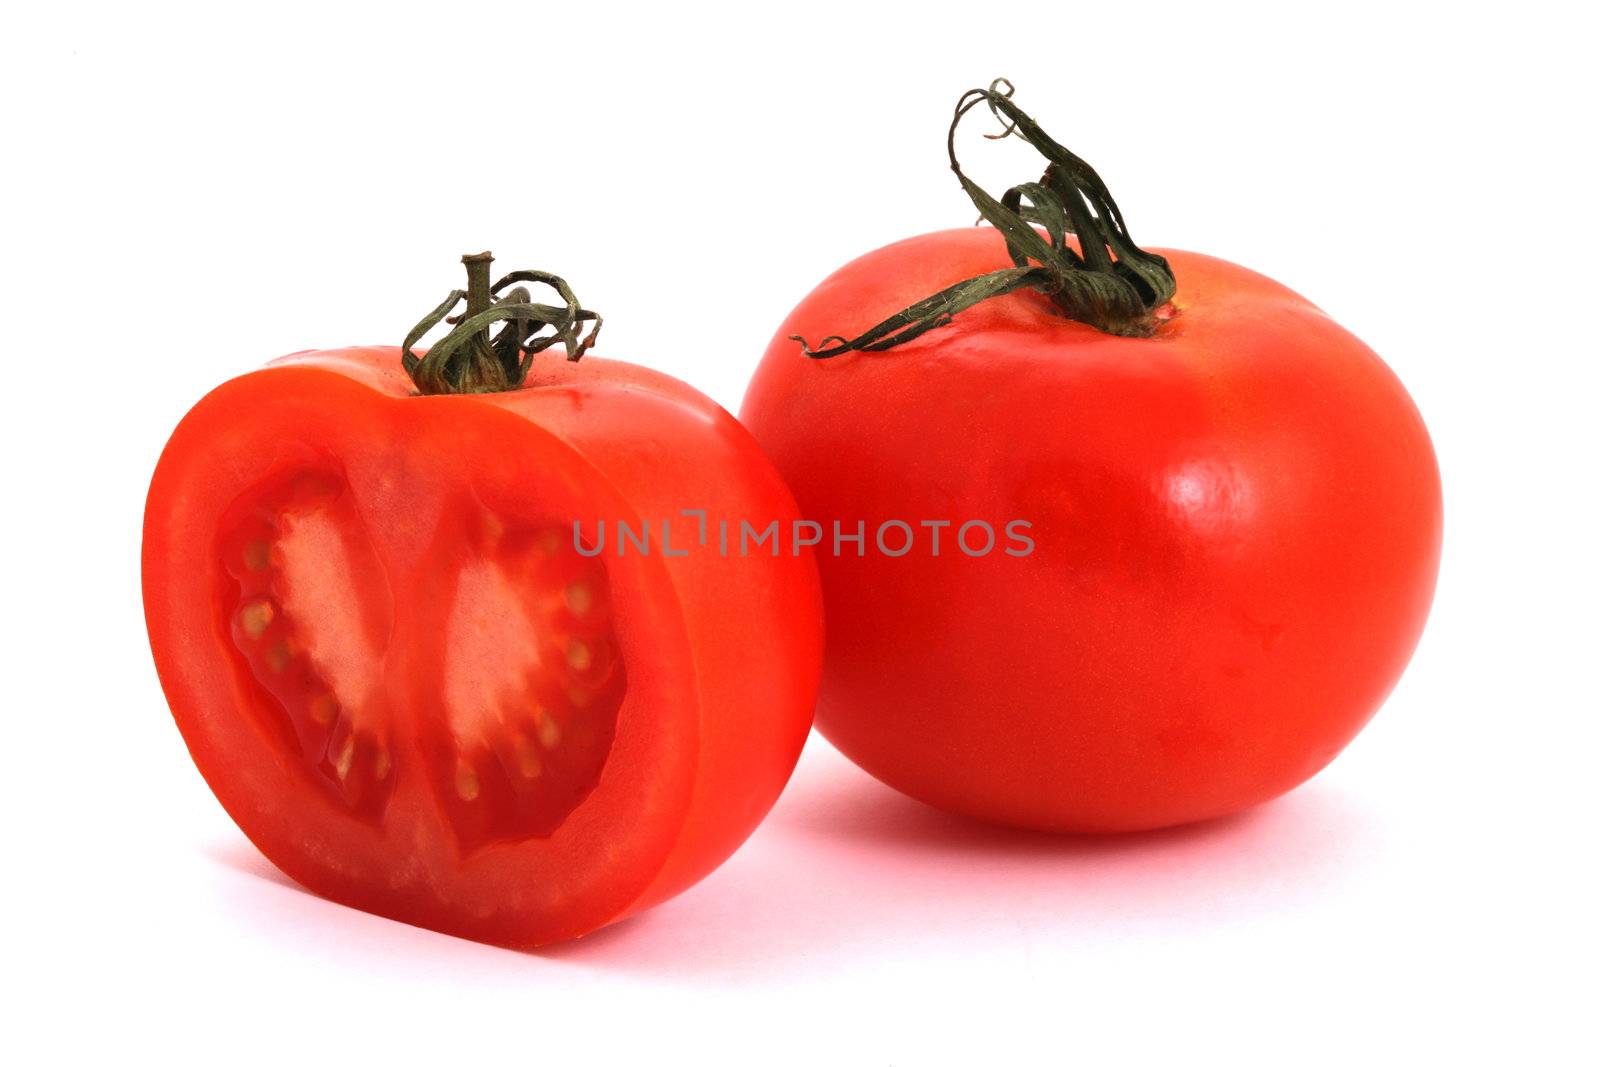 Tomato and half of tomato on a white background